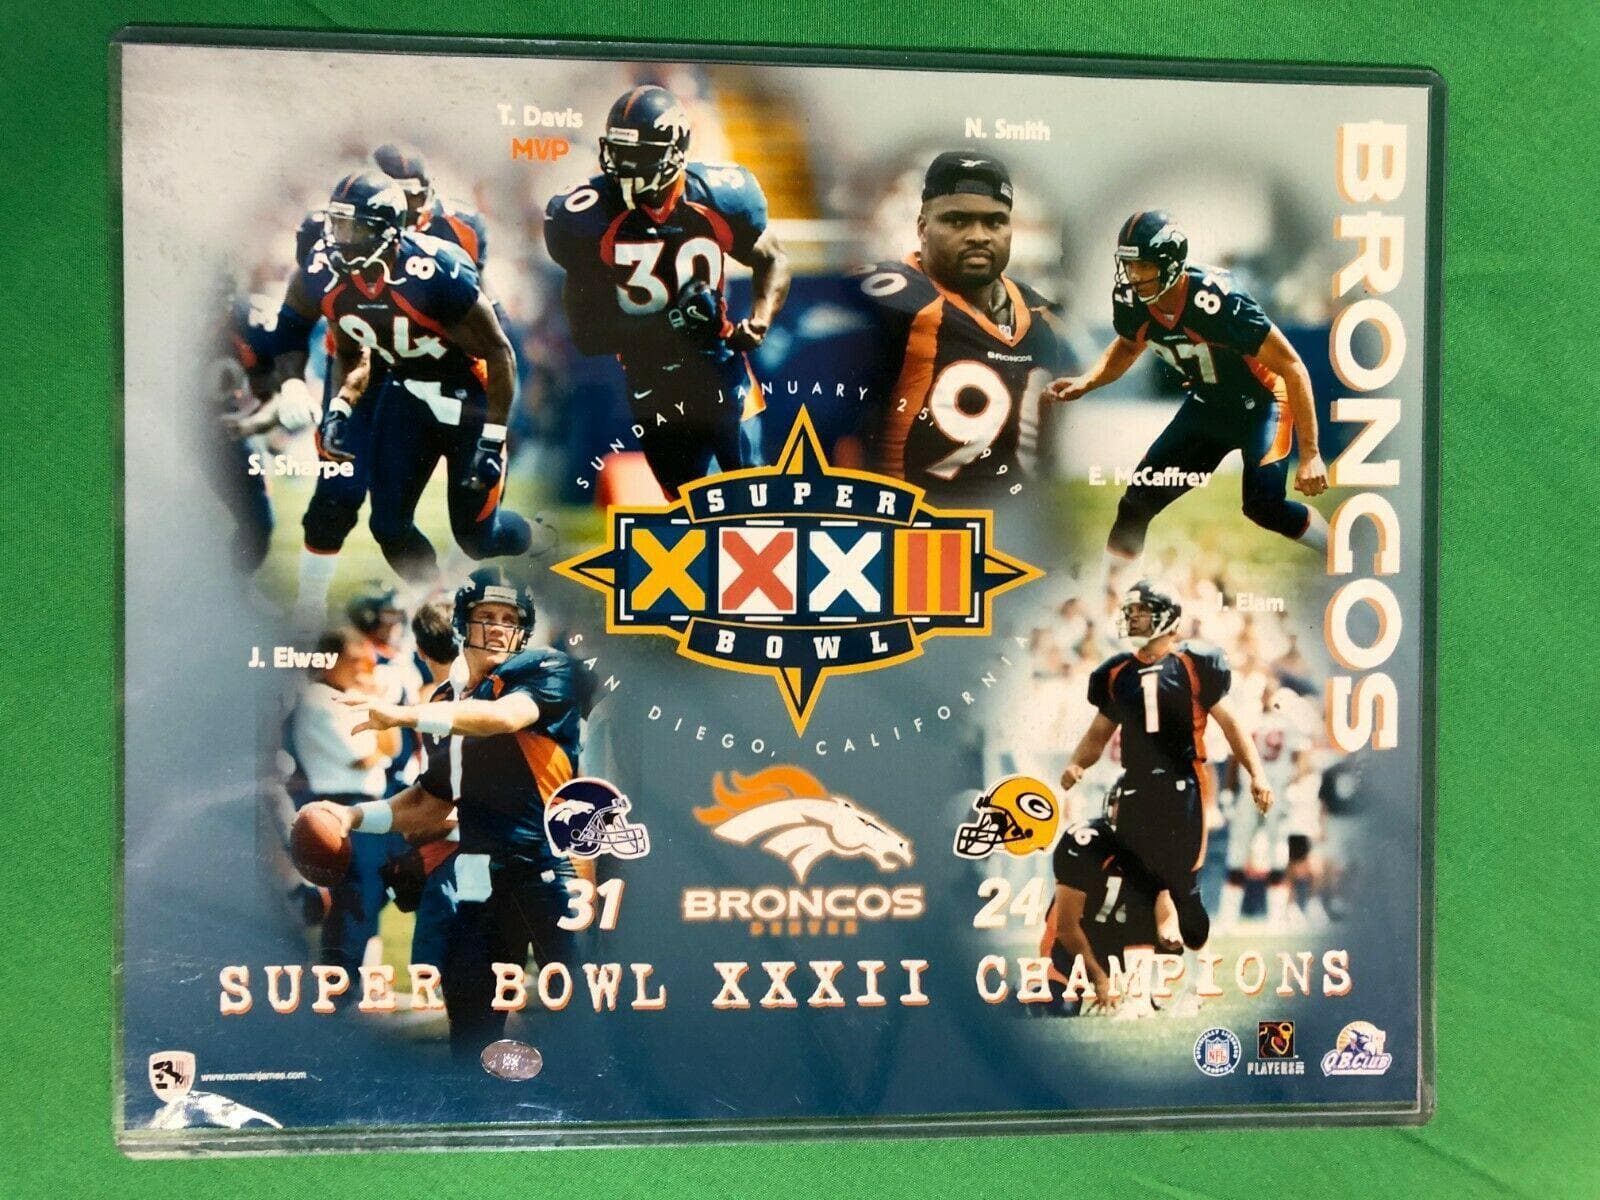 NFL Denver Broncos Super Bowl XXXII 8x10 Ready to Frame Photo Collage